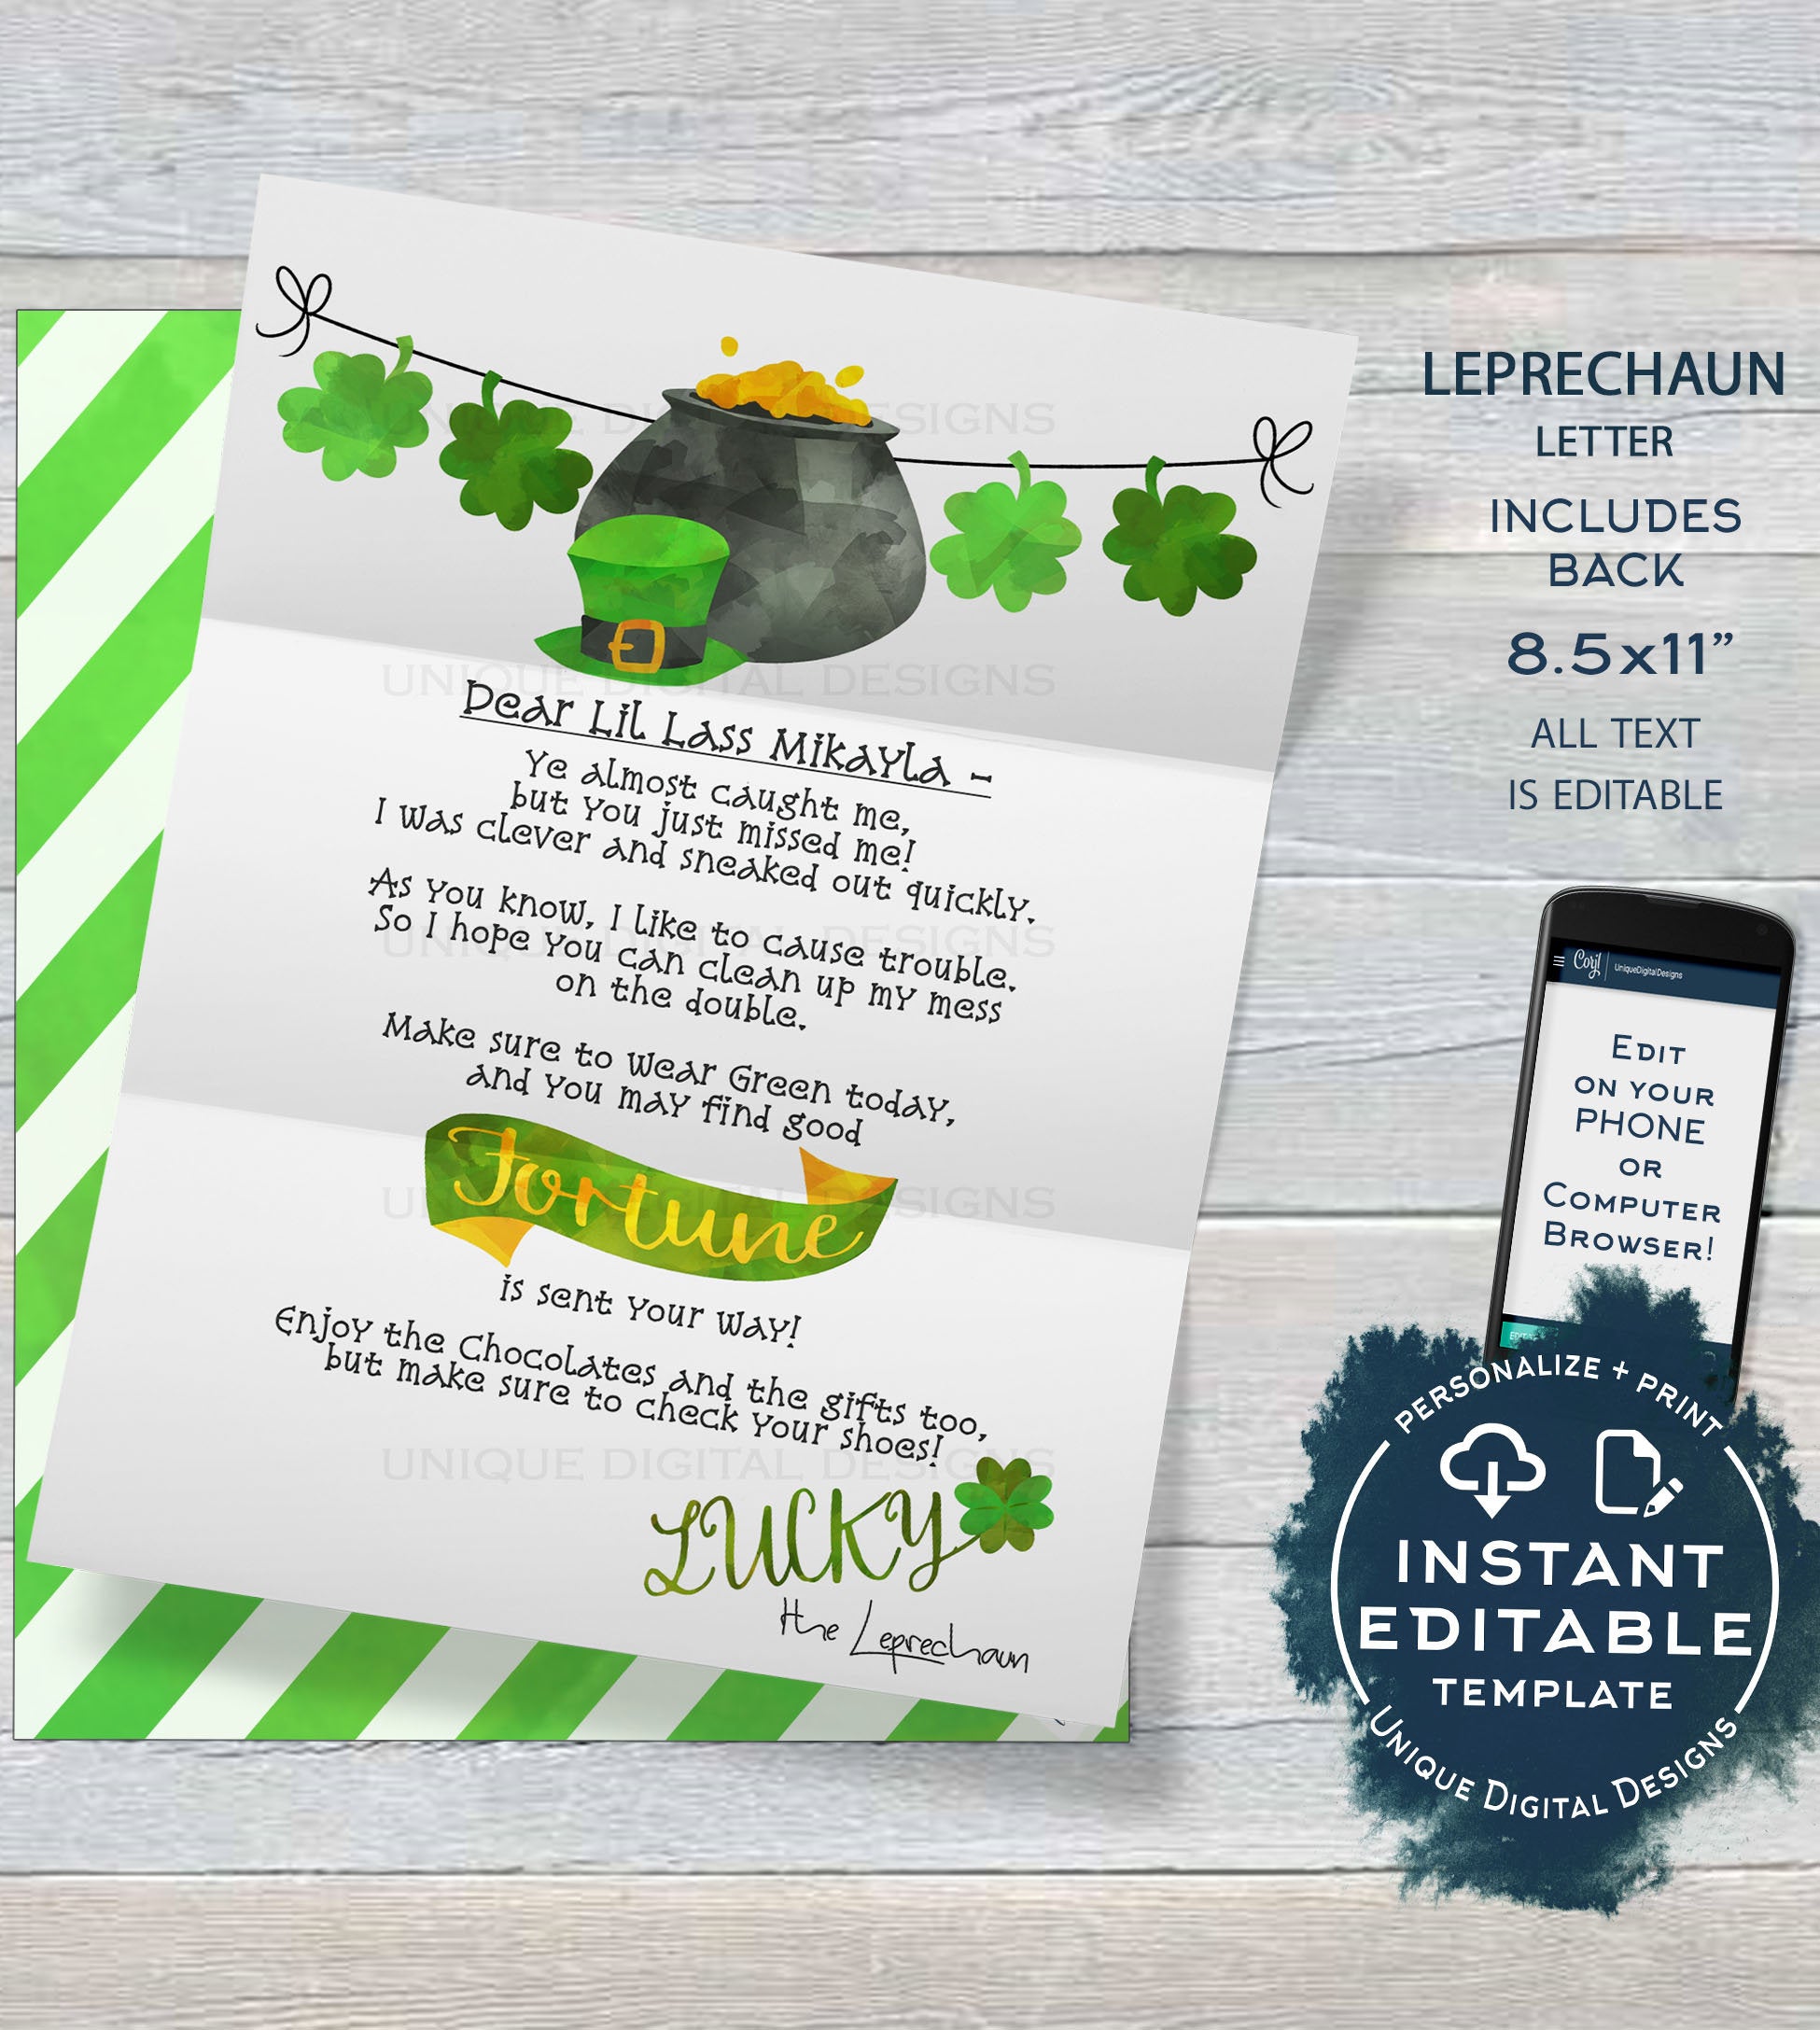 Leprechaun Letter, Editable St Patrick's Day Note, Lucky Irish Leprech